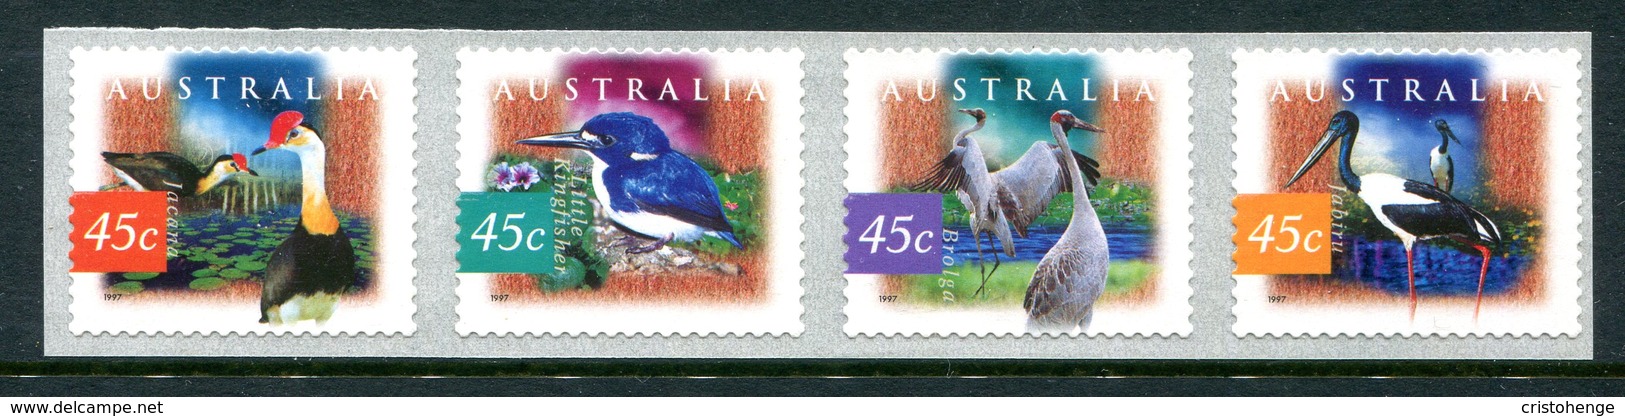 Australia 1997 Fauna & Flora - 2nd Issue - Self-adhesive - P.12½ X 13 - Set MNH (SG 1687d-1690d) - Mint Stamps